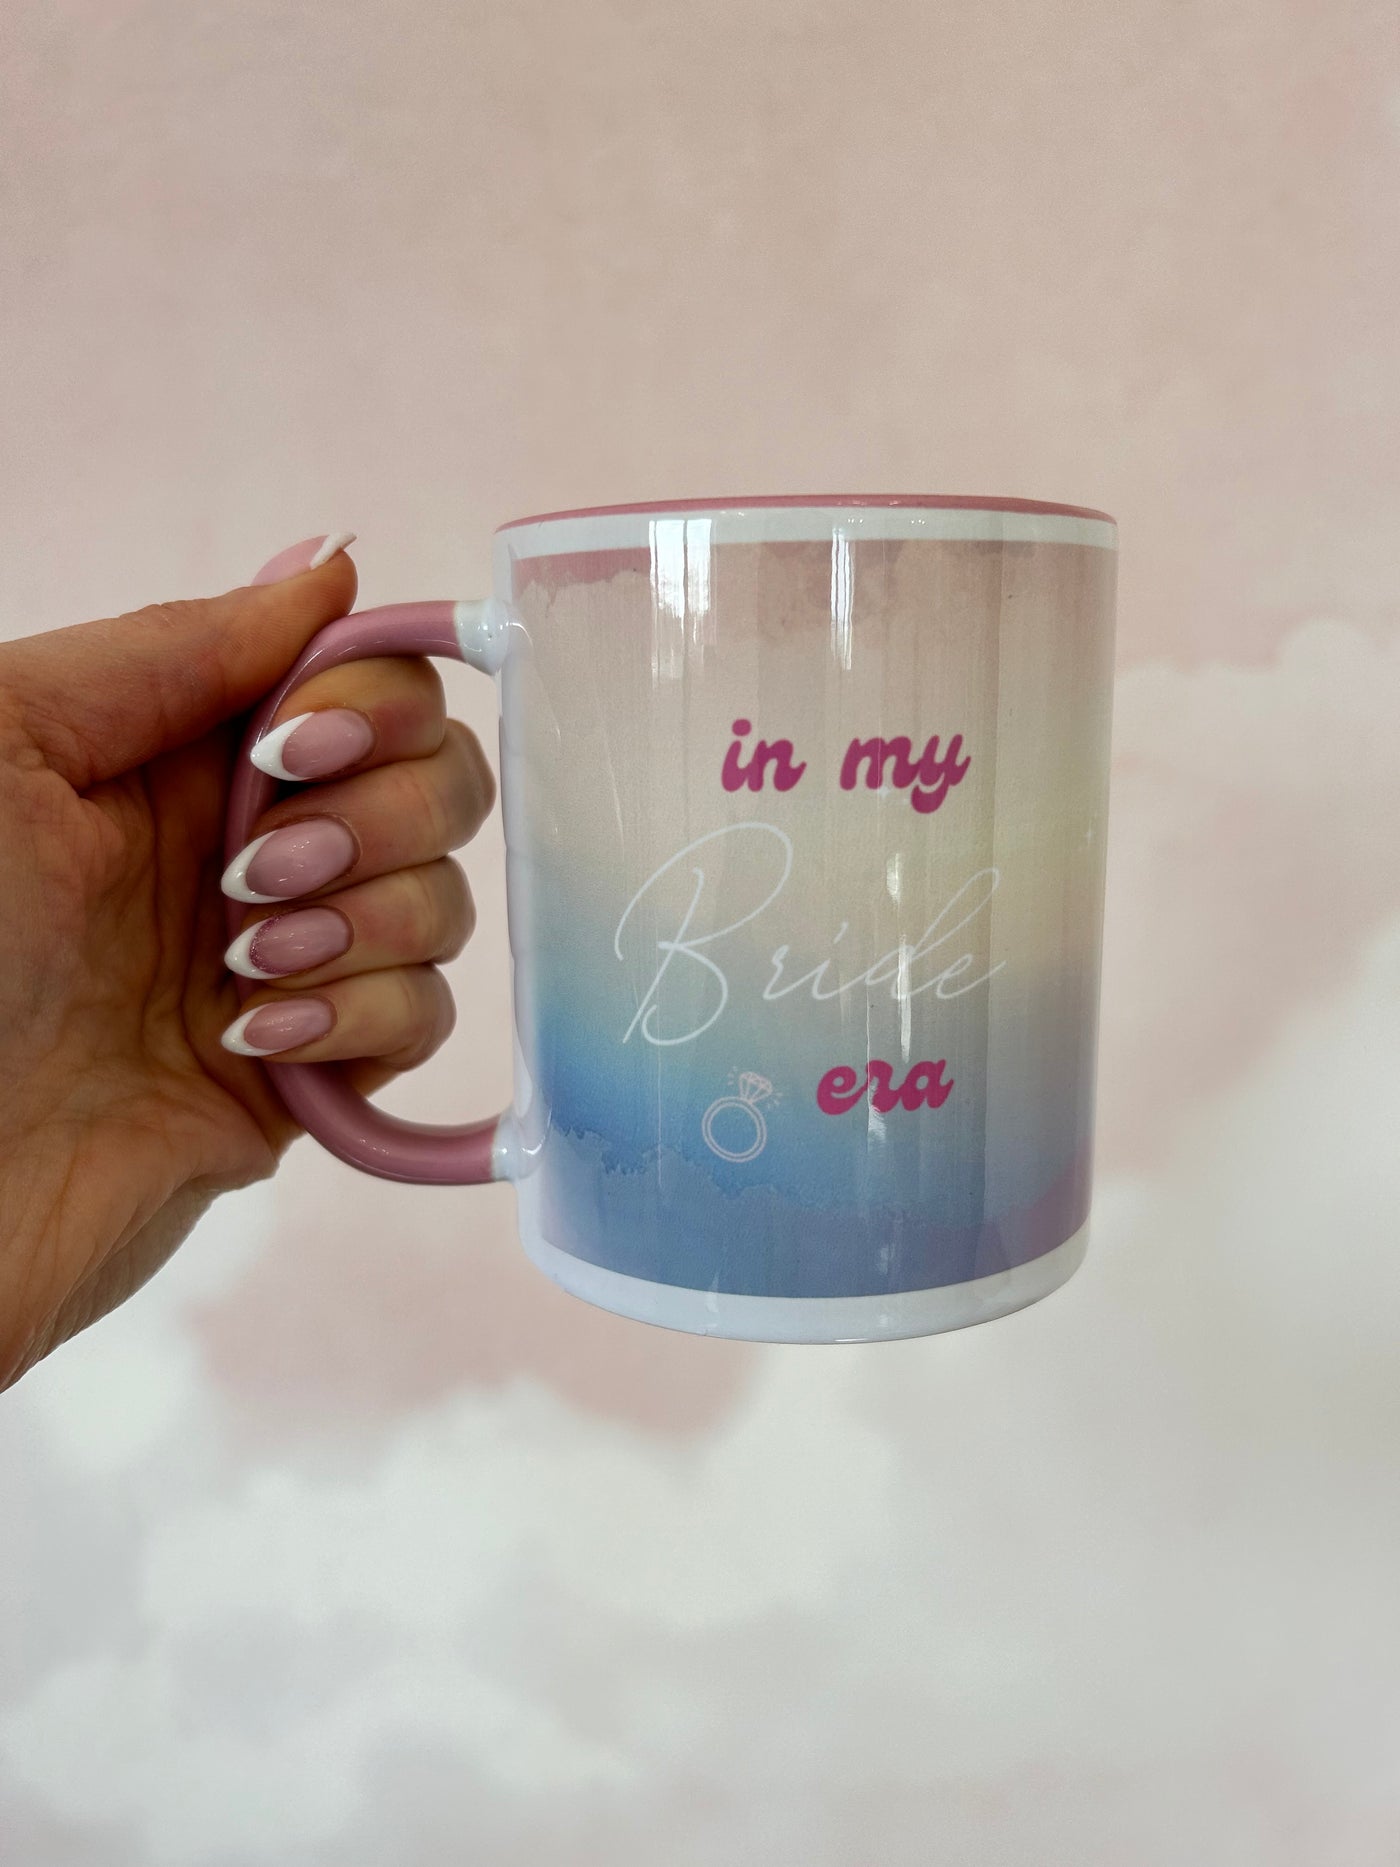 ‘In my Bride era’ Mug